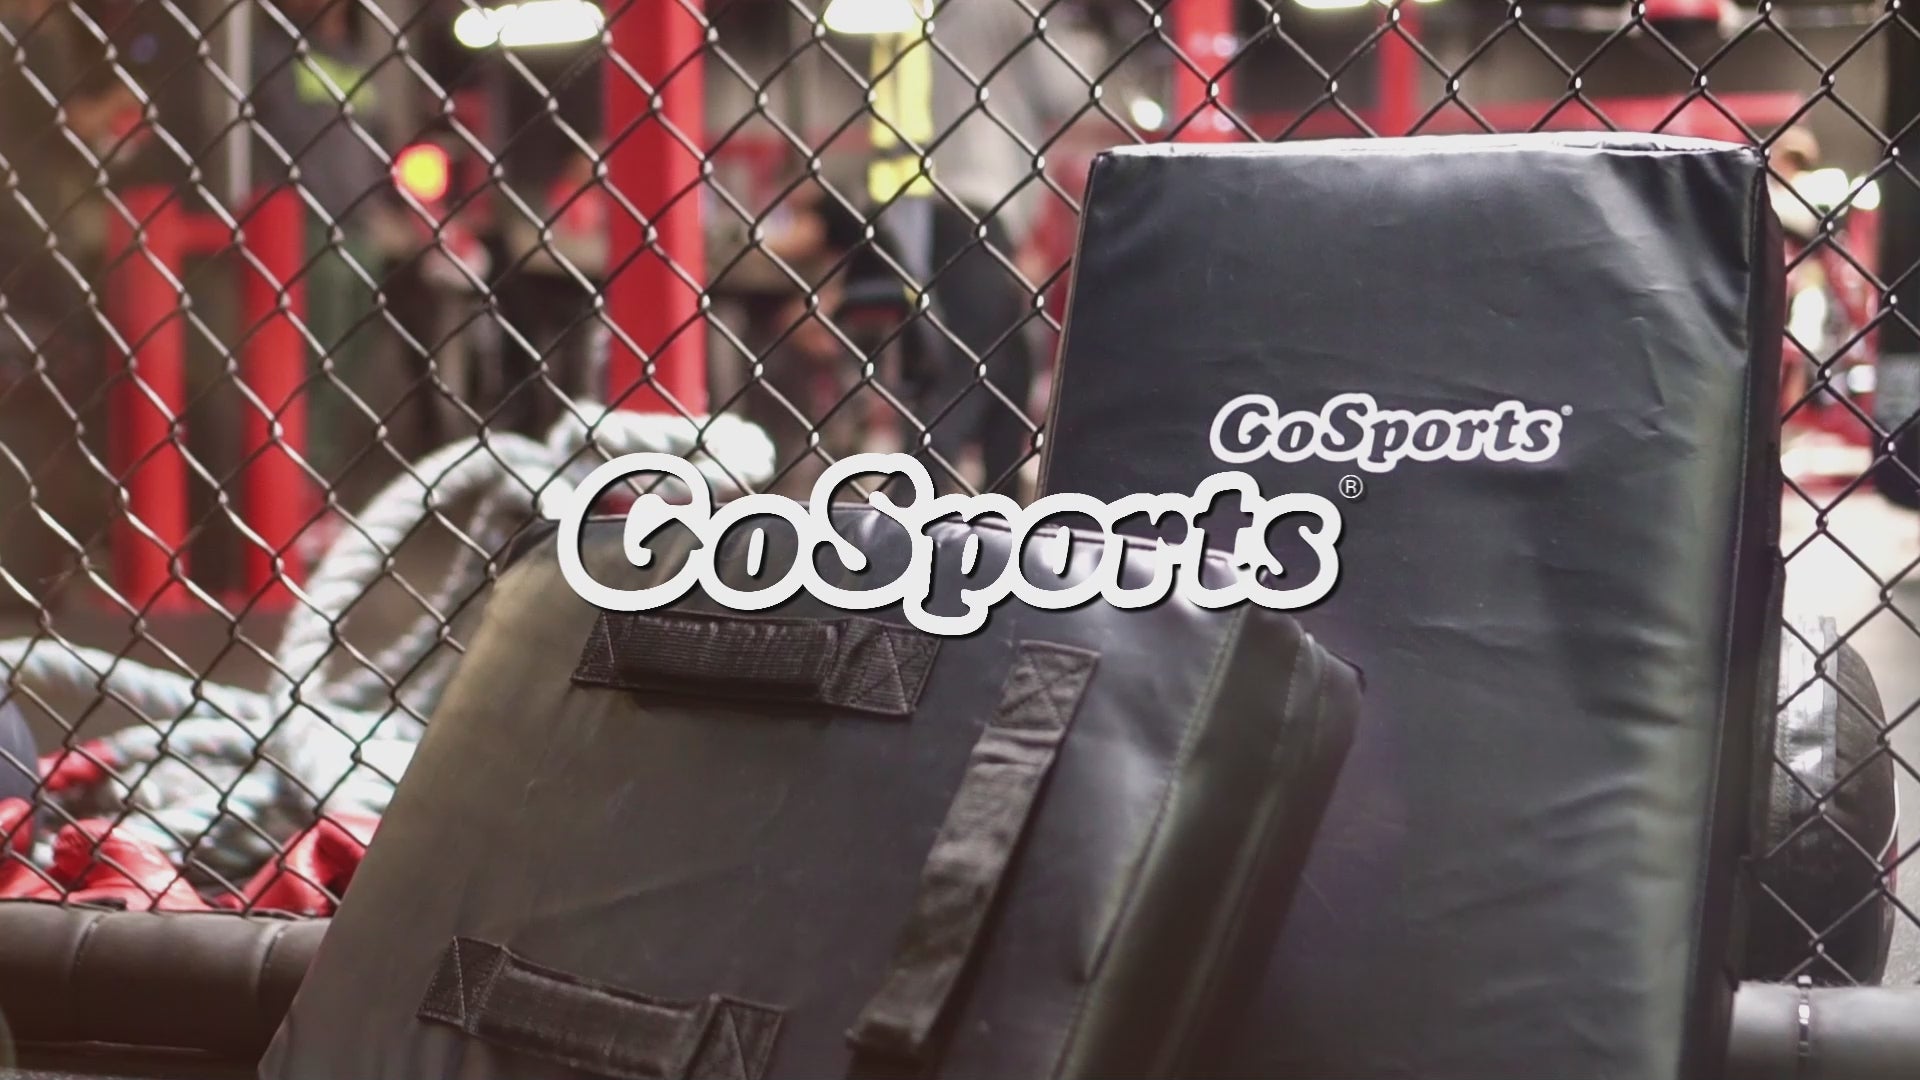 GoSports Counterstrike Training Pads –